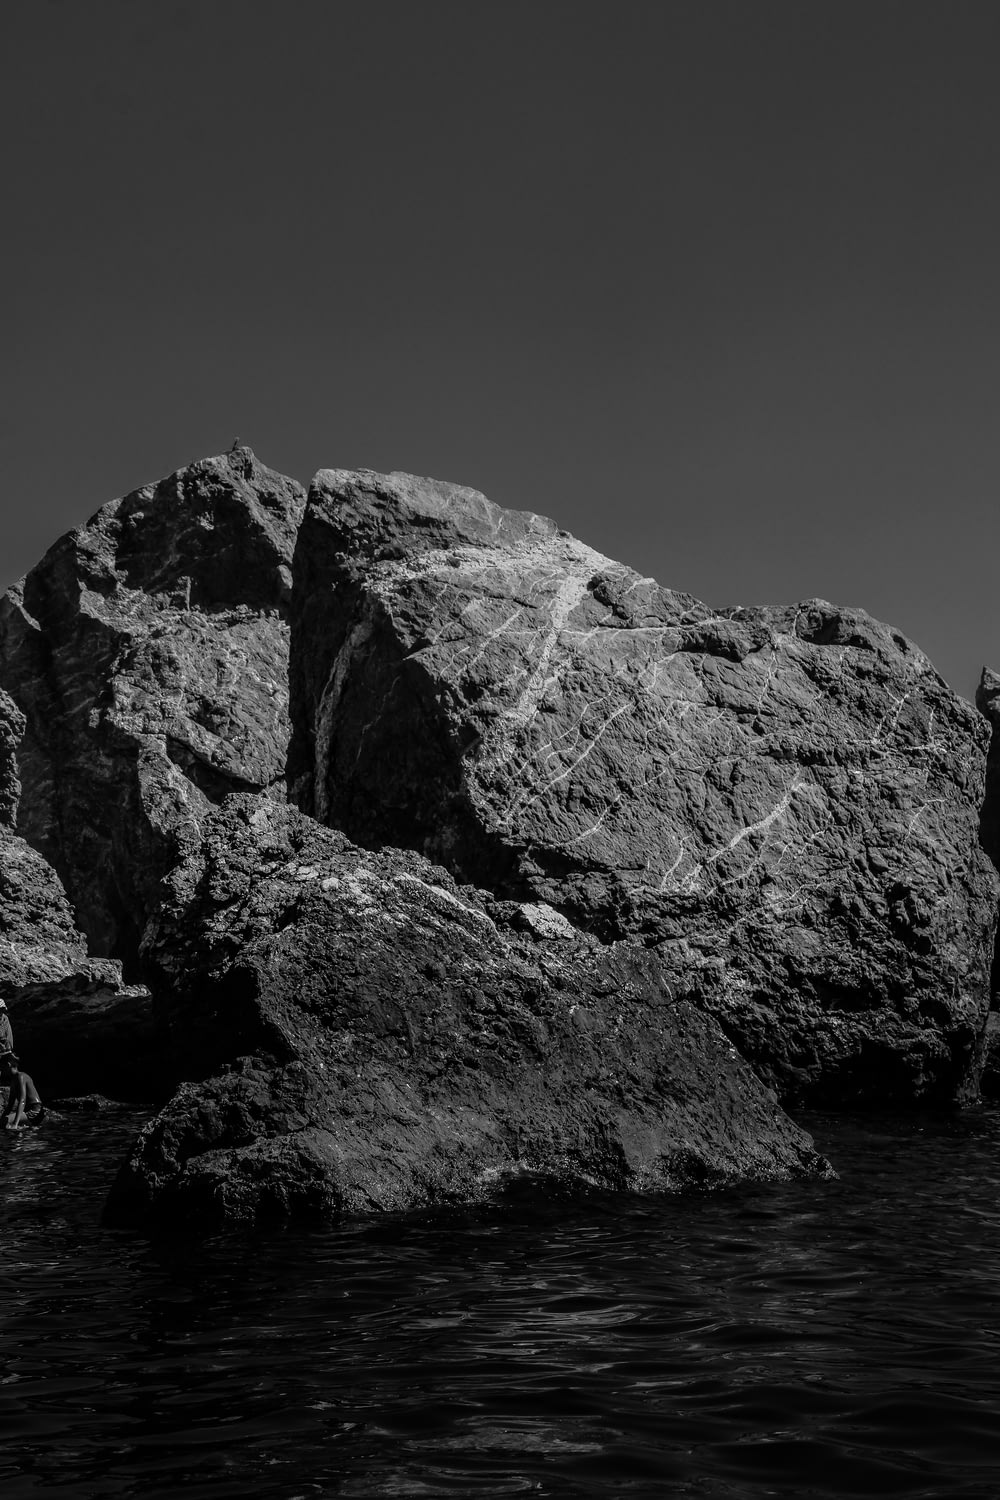 grayscale photo of rocky mountain near body of water